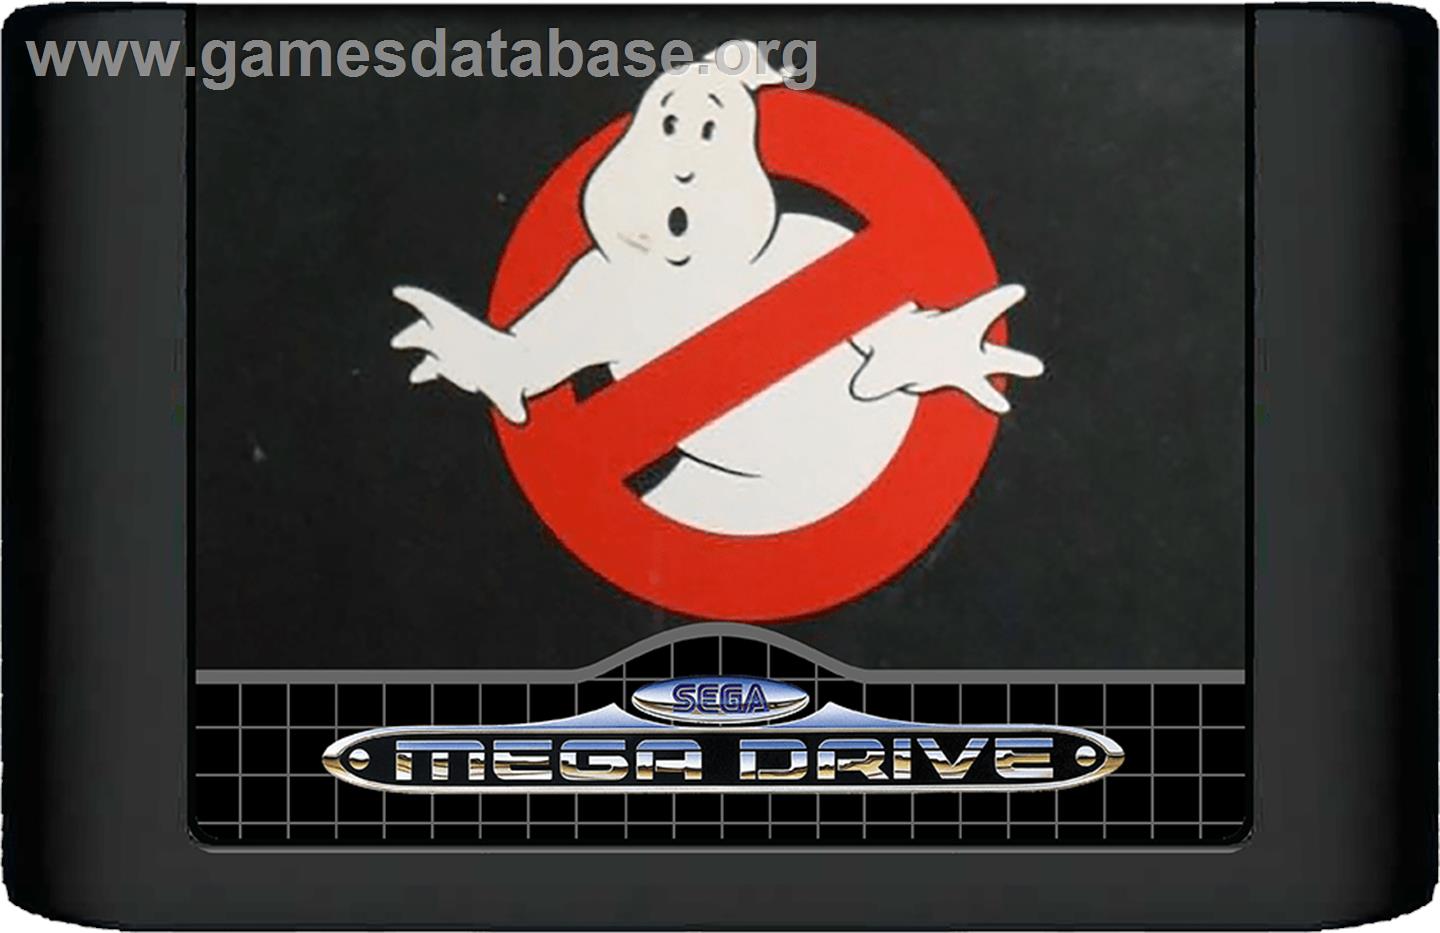 Ghostbusters - Sega Genesis - Artwork - Cartridge